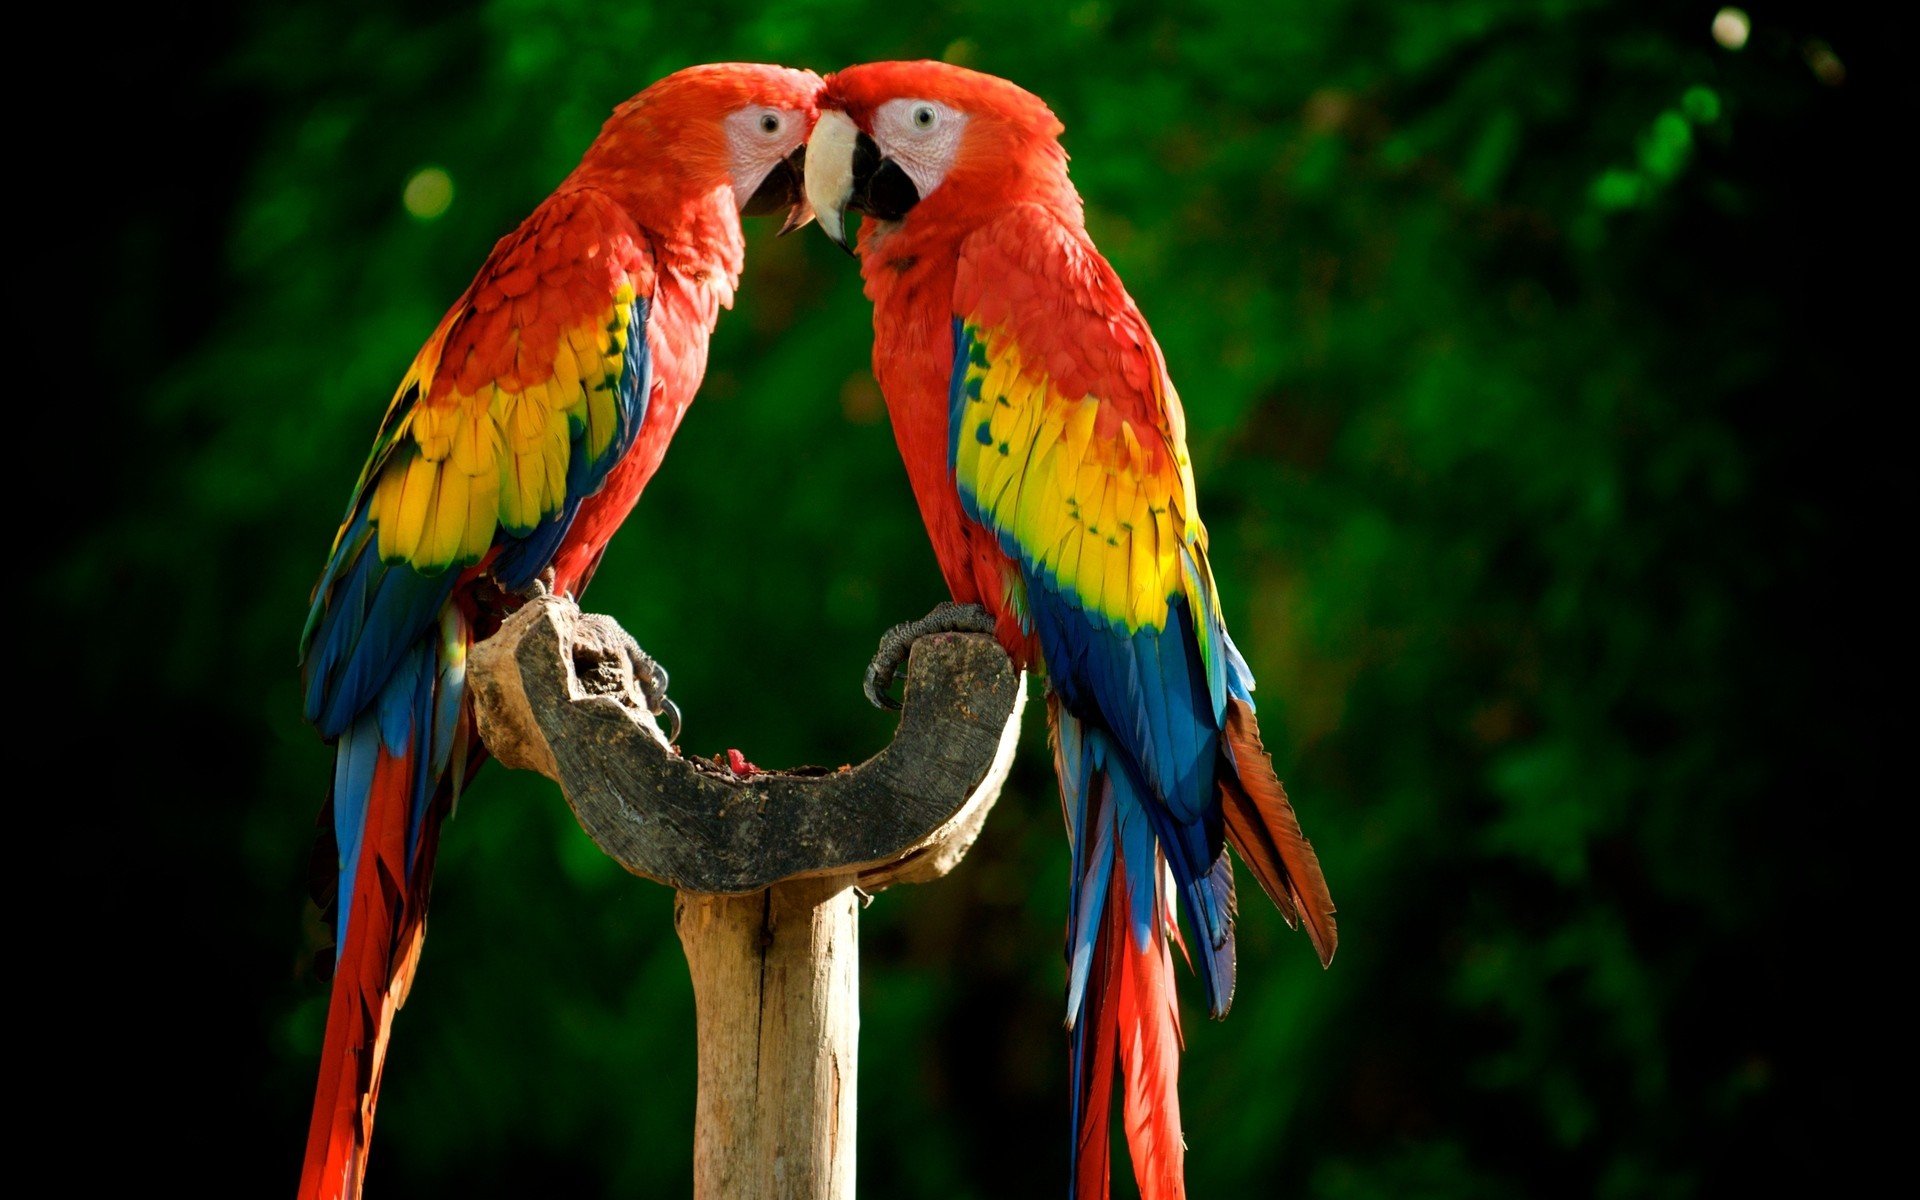 Birds parrots Scarlet Macaws wallpaper 1920x1200 249005